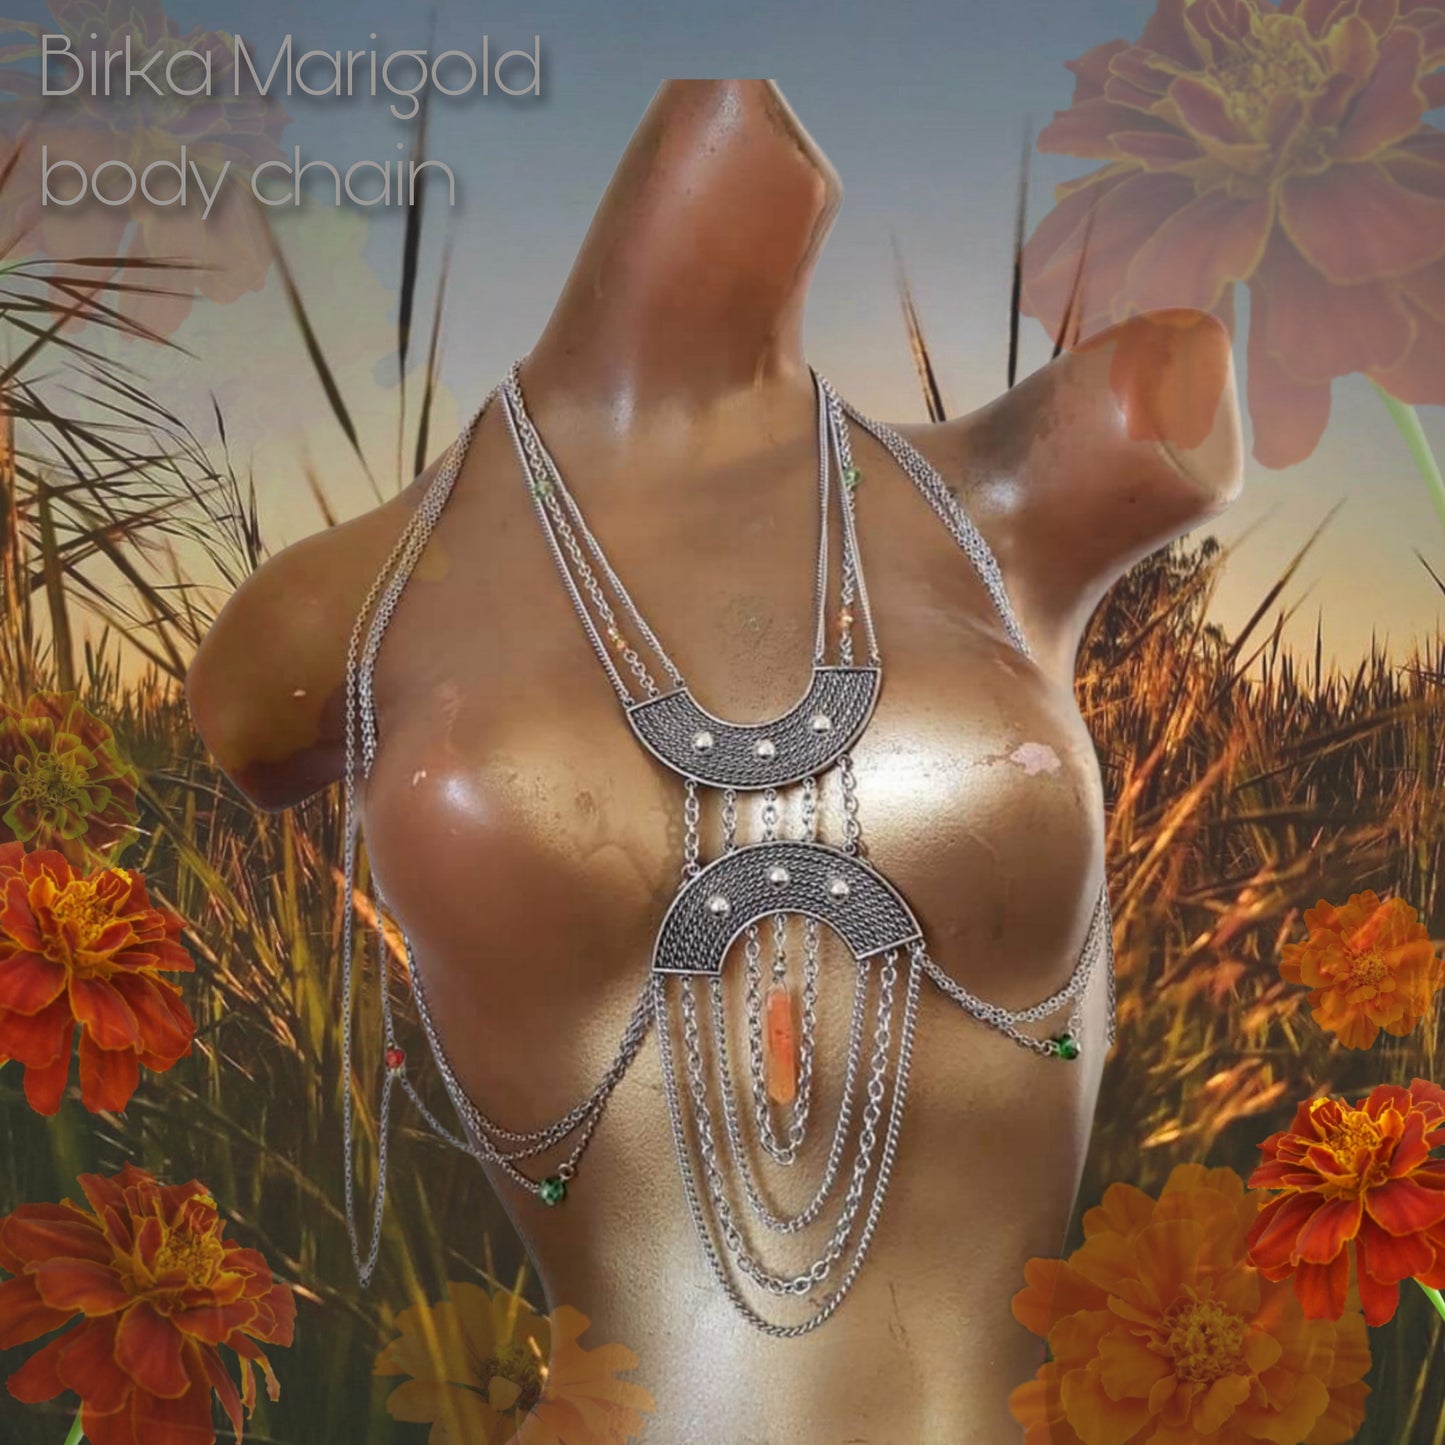 Fragments of Birka Mini Collection: the Birka Marigold Bodychain